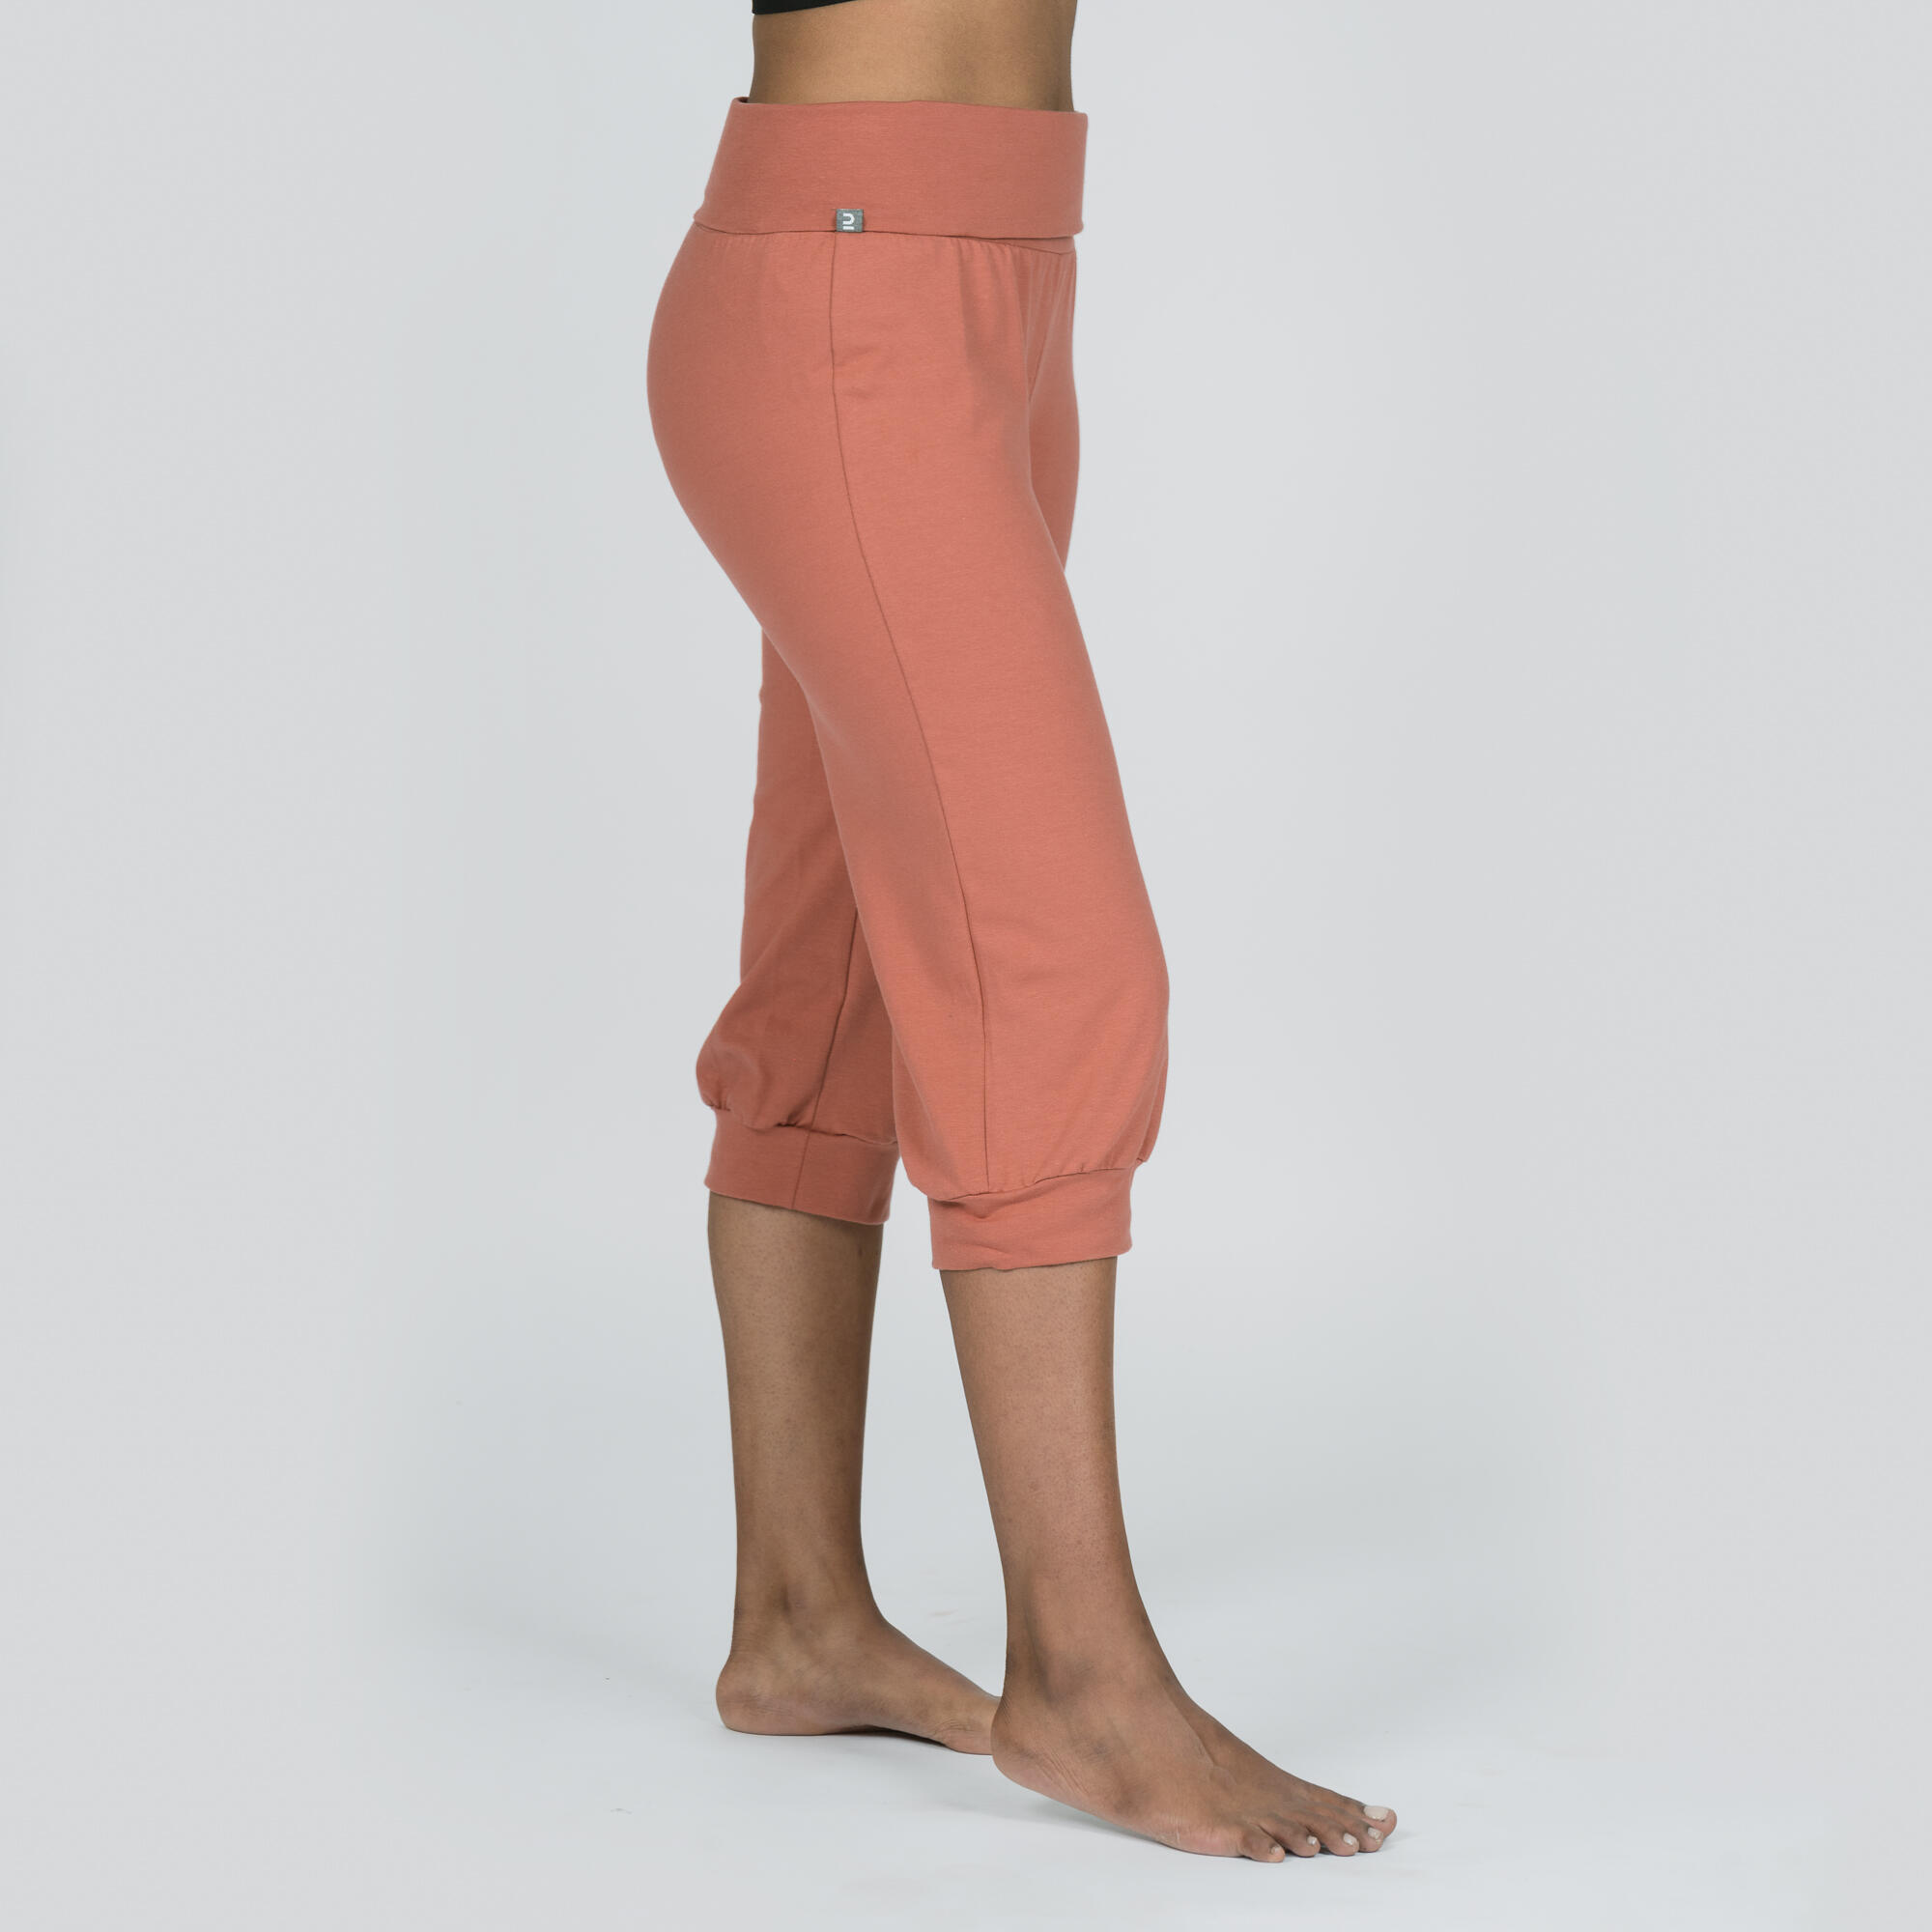 Womens Small Sizes Capri Crop Yoga Pants, Waistband Pocket, Cotton Stretch Grey  Yoga City San Diego Crop Pants, Drawstring Waist Yoga Pants 